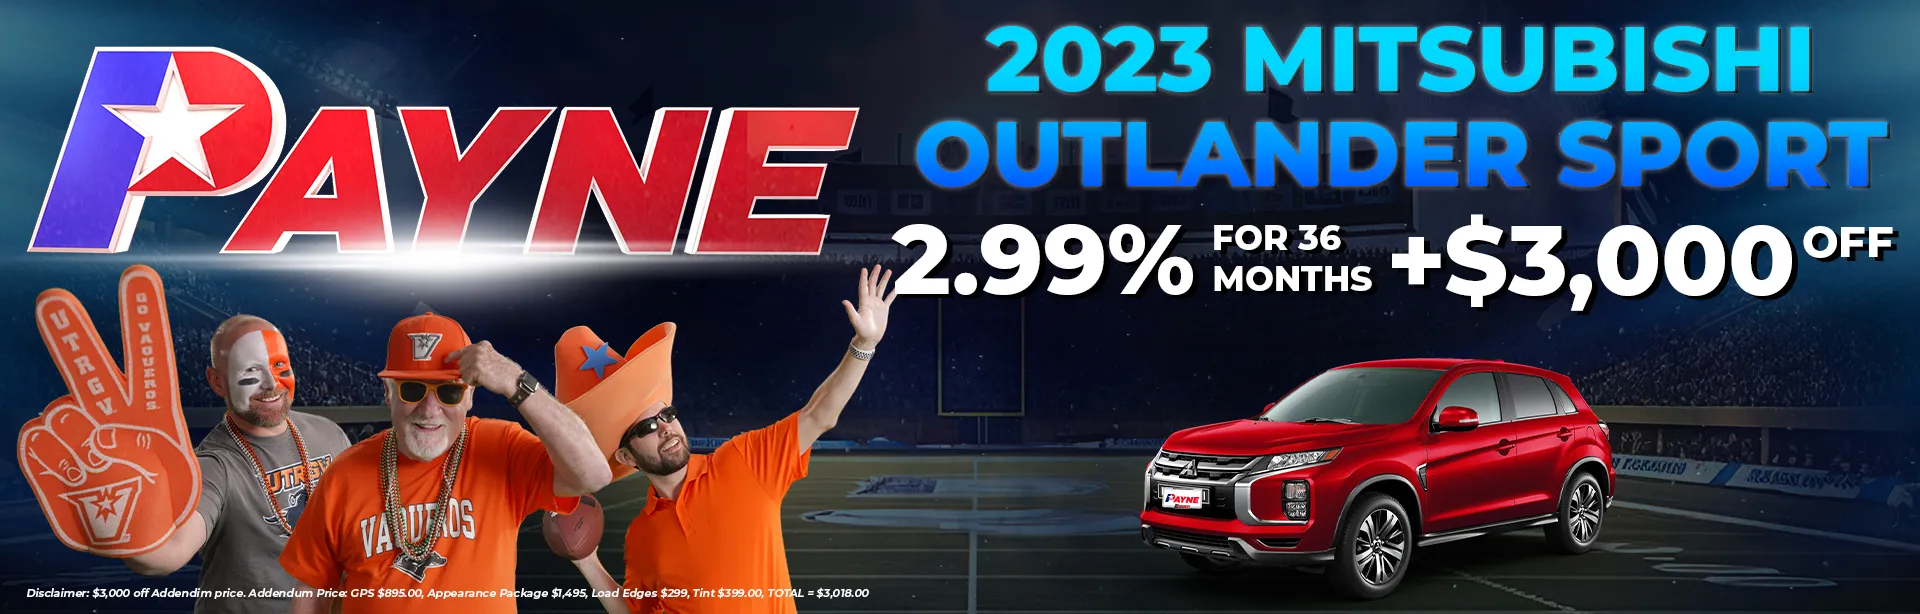 Get 2.99% off a 2023 Mitsubishi Outlander Sport